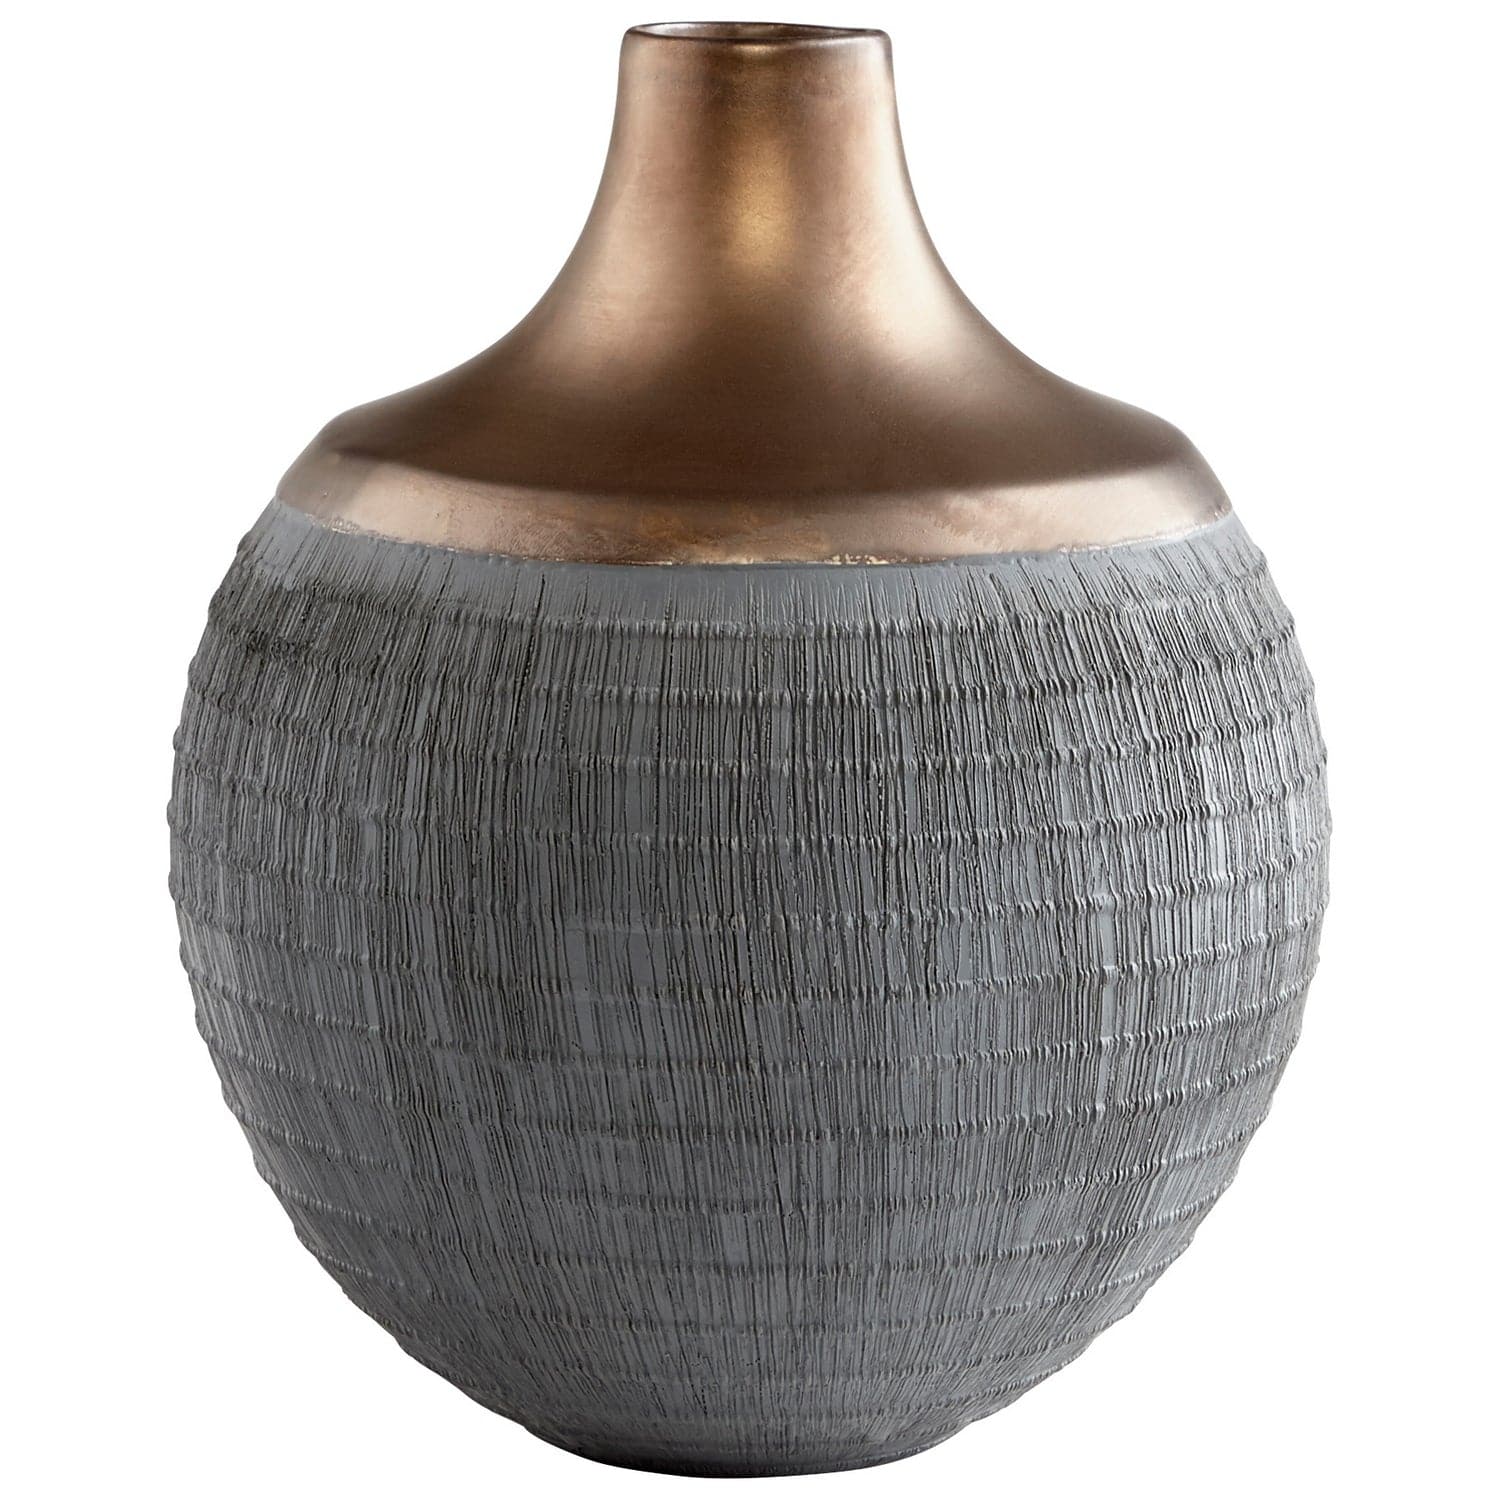 Cyan - 09005 - Vase - Charcoal Grey And Bronze